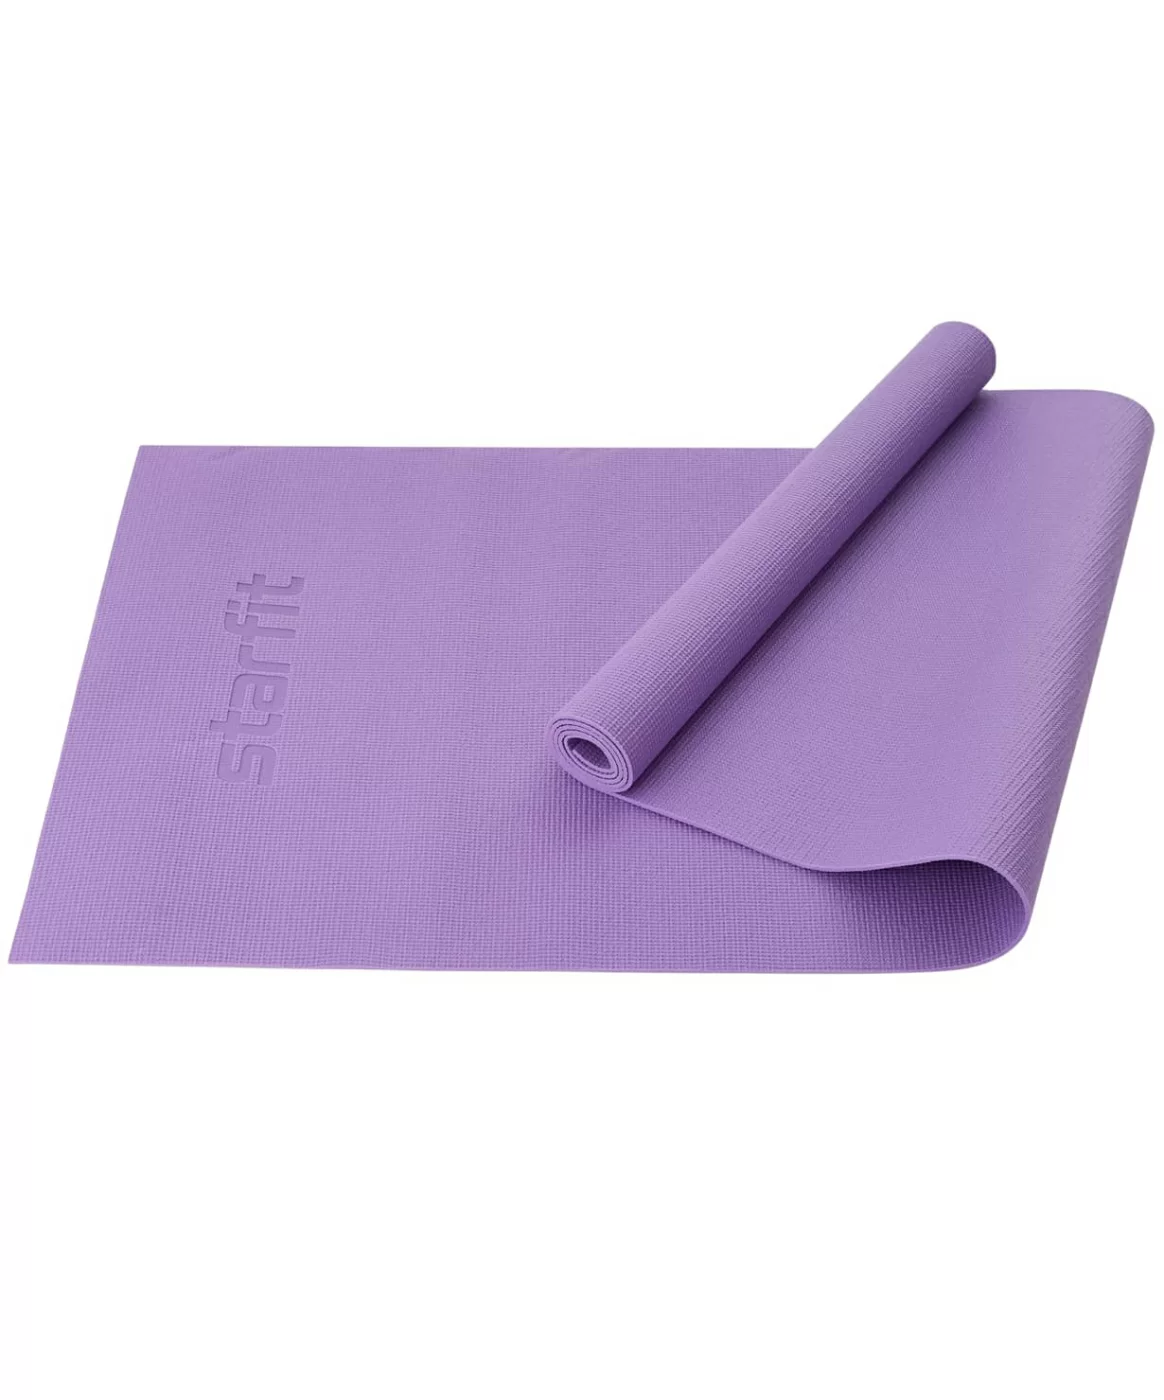 Фото Коврик для йоги 183x61x0,3 см StarFit FM-101 PVC фиолетовый пастель 1587 со склада магазина СпортЕВ